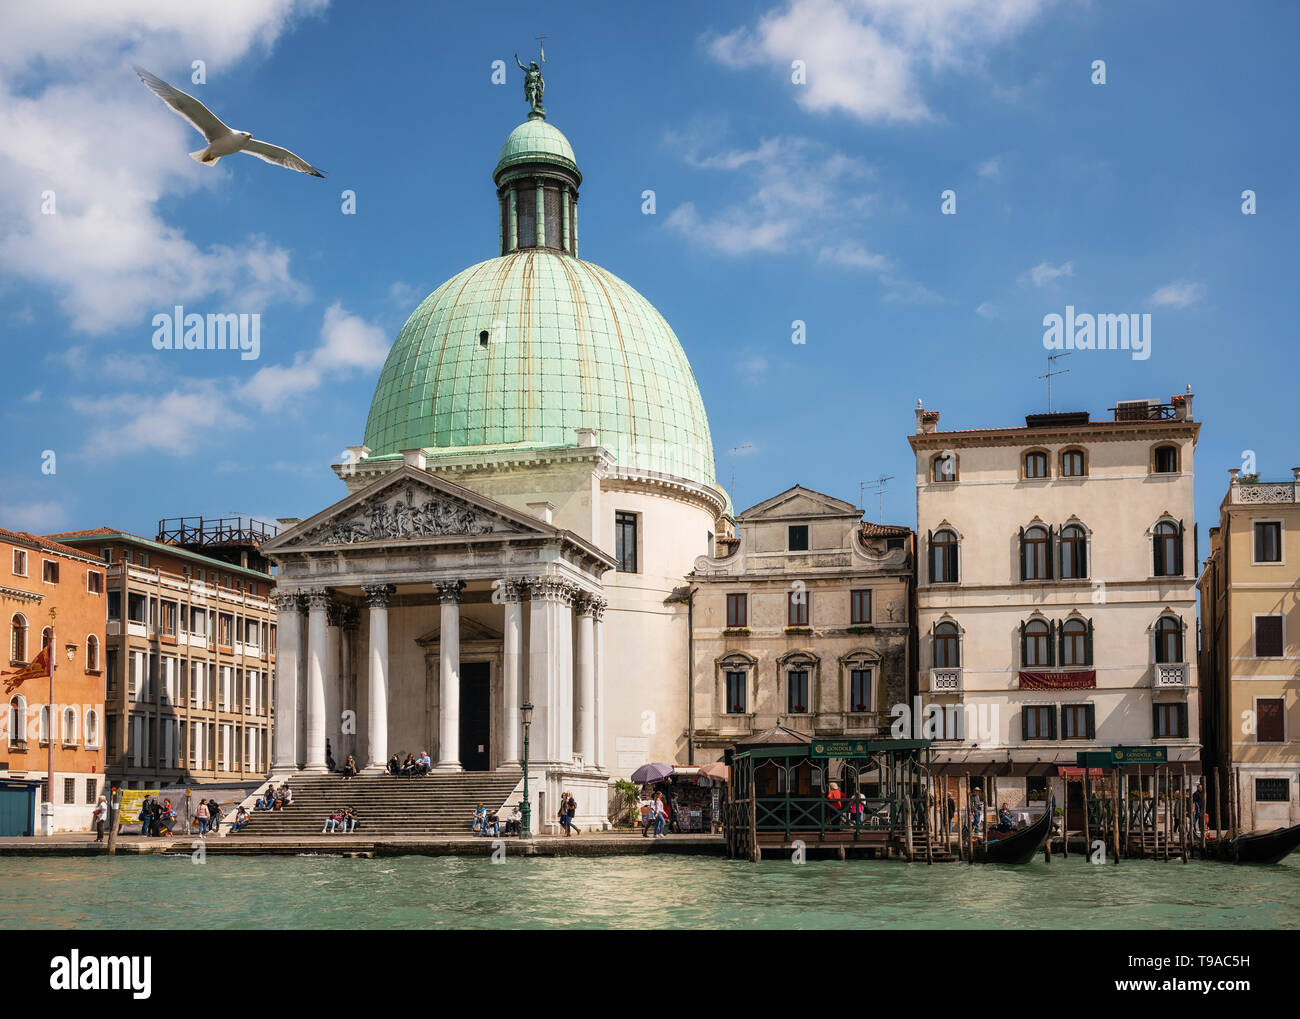 Venedig, Italien - 9. Mai 2019: Möwe Fliegen gegen Basilika Santa Maria della Salute am Ufer des Canal Grande in Venedig, Italien Stockfoto